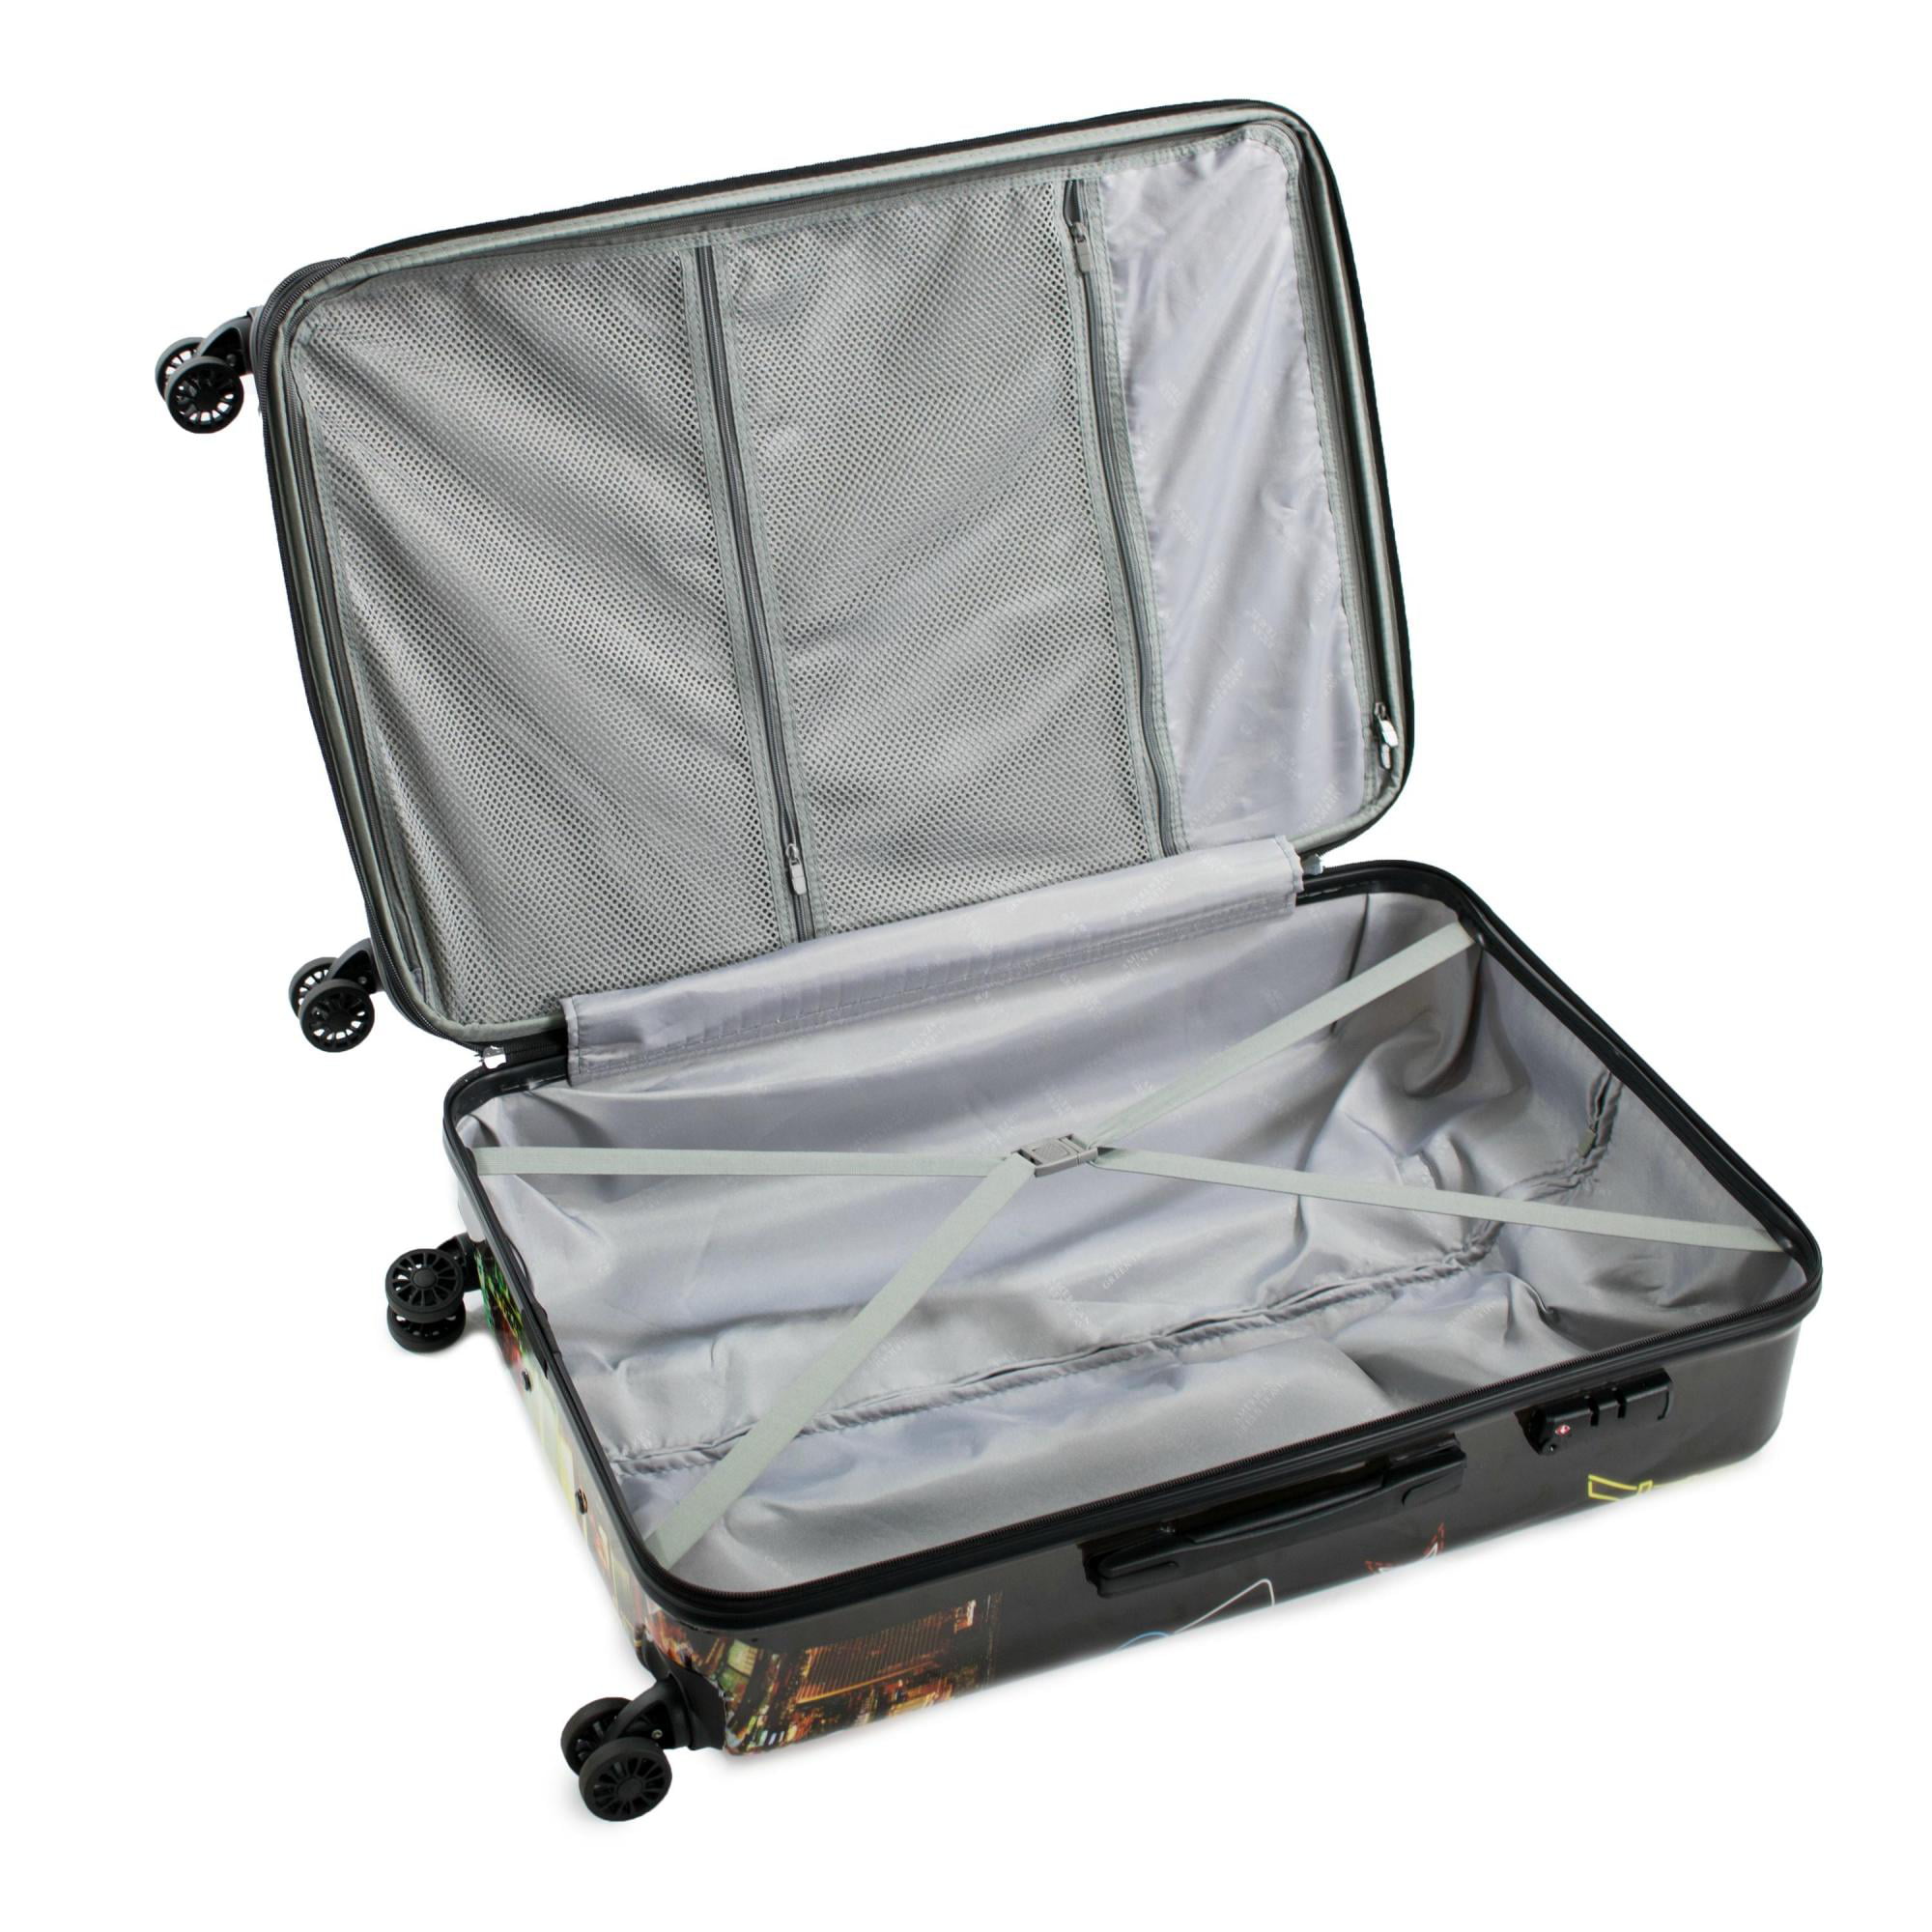 american green travel luggage 20 inch